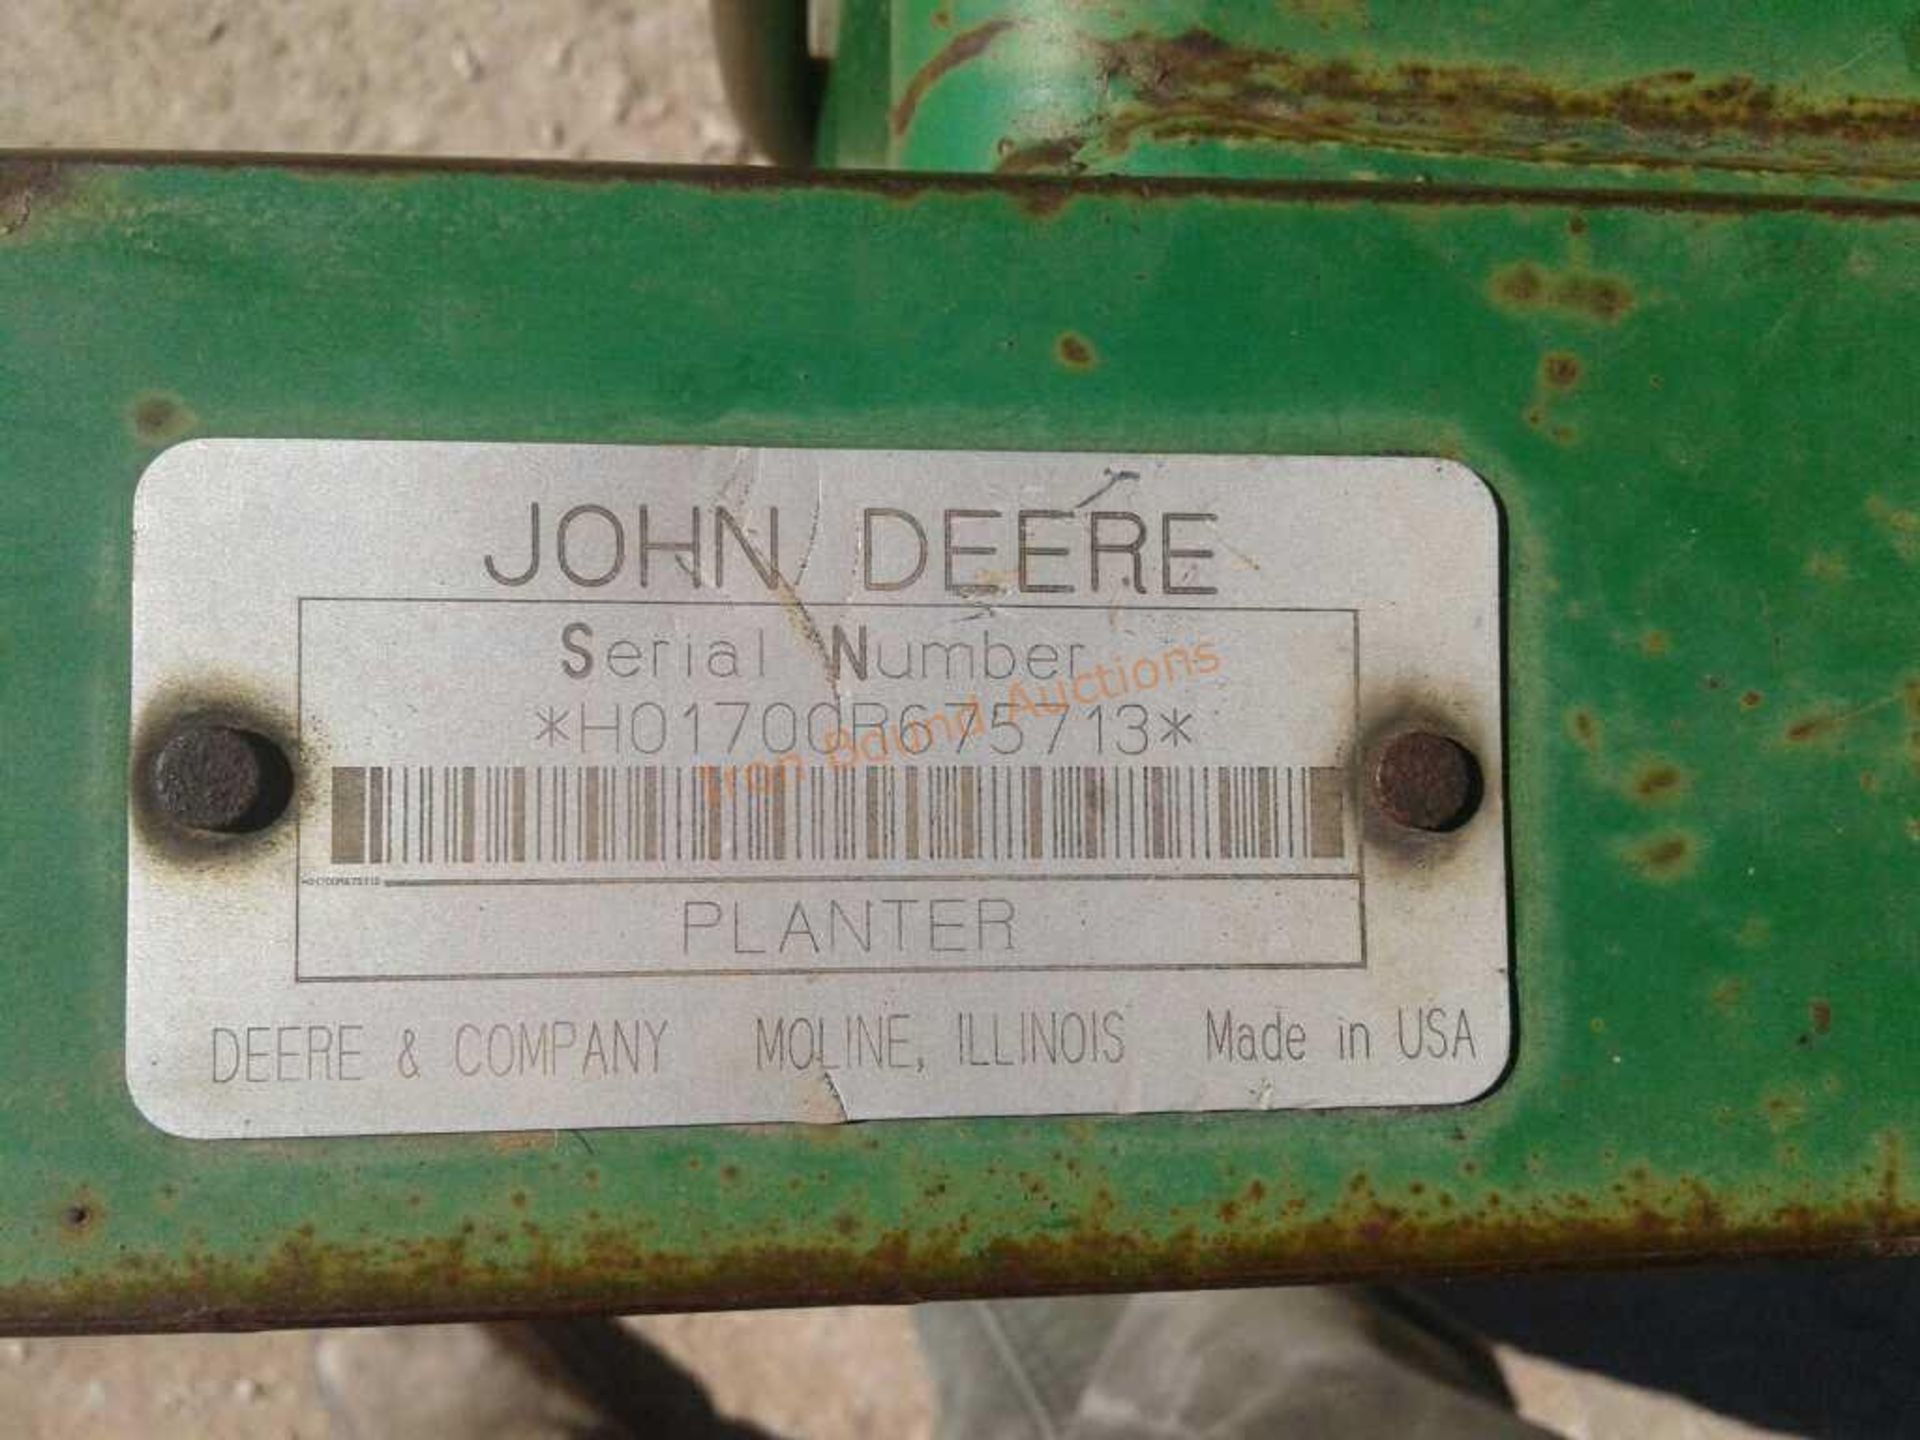 John Deere Max Emerge Plus Vacumeter 1700 Planter - Image 2 of 11